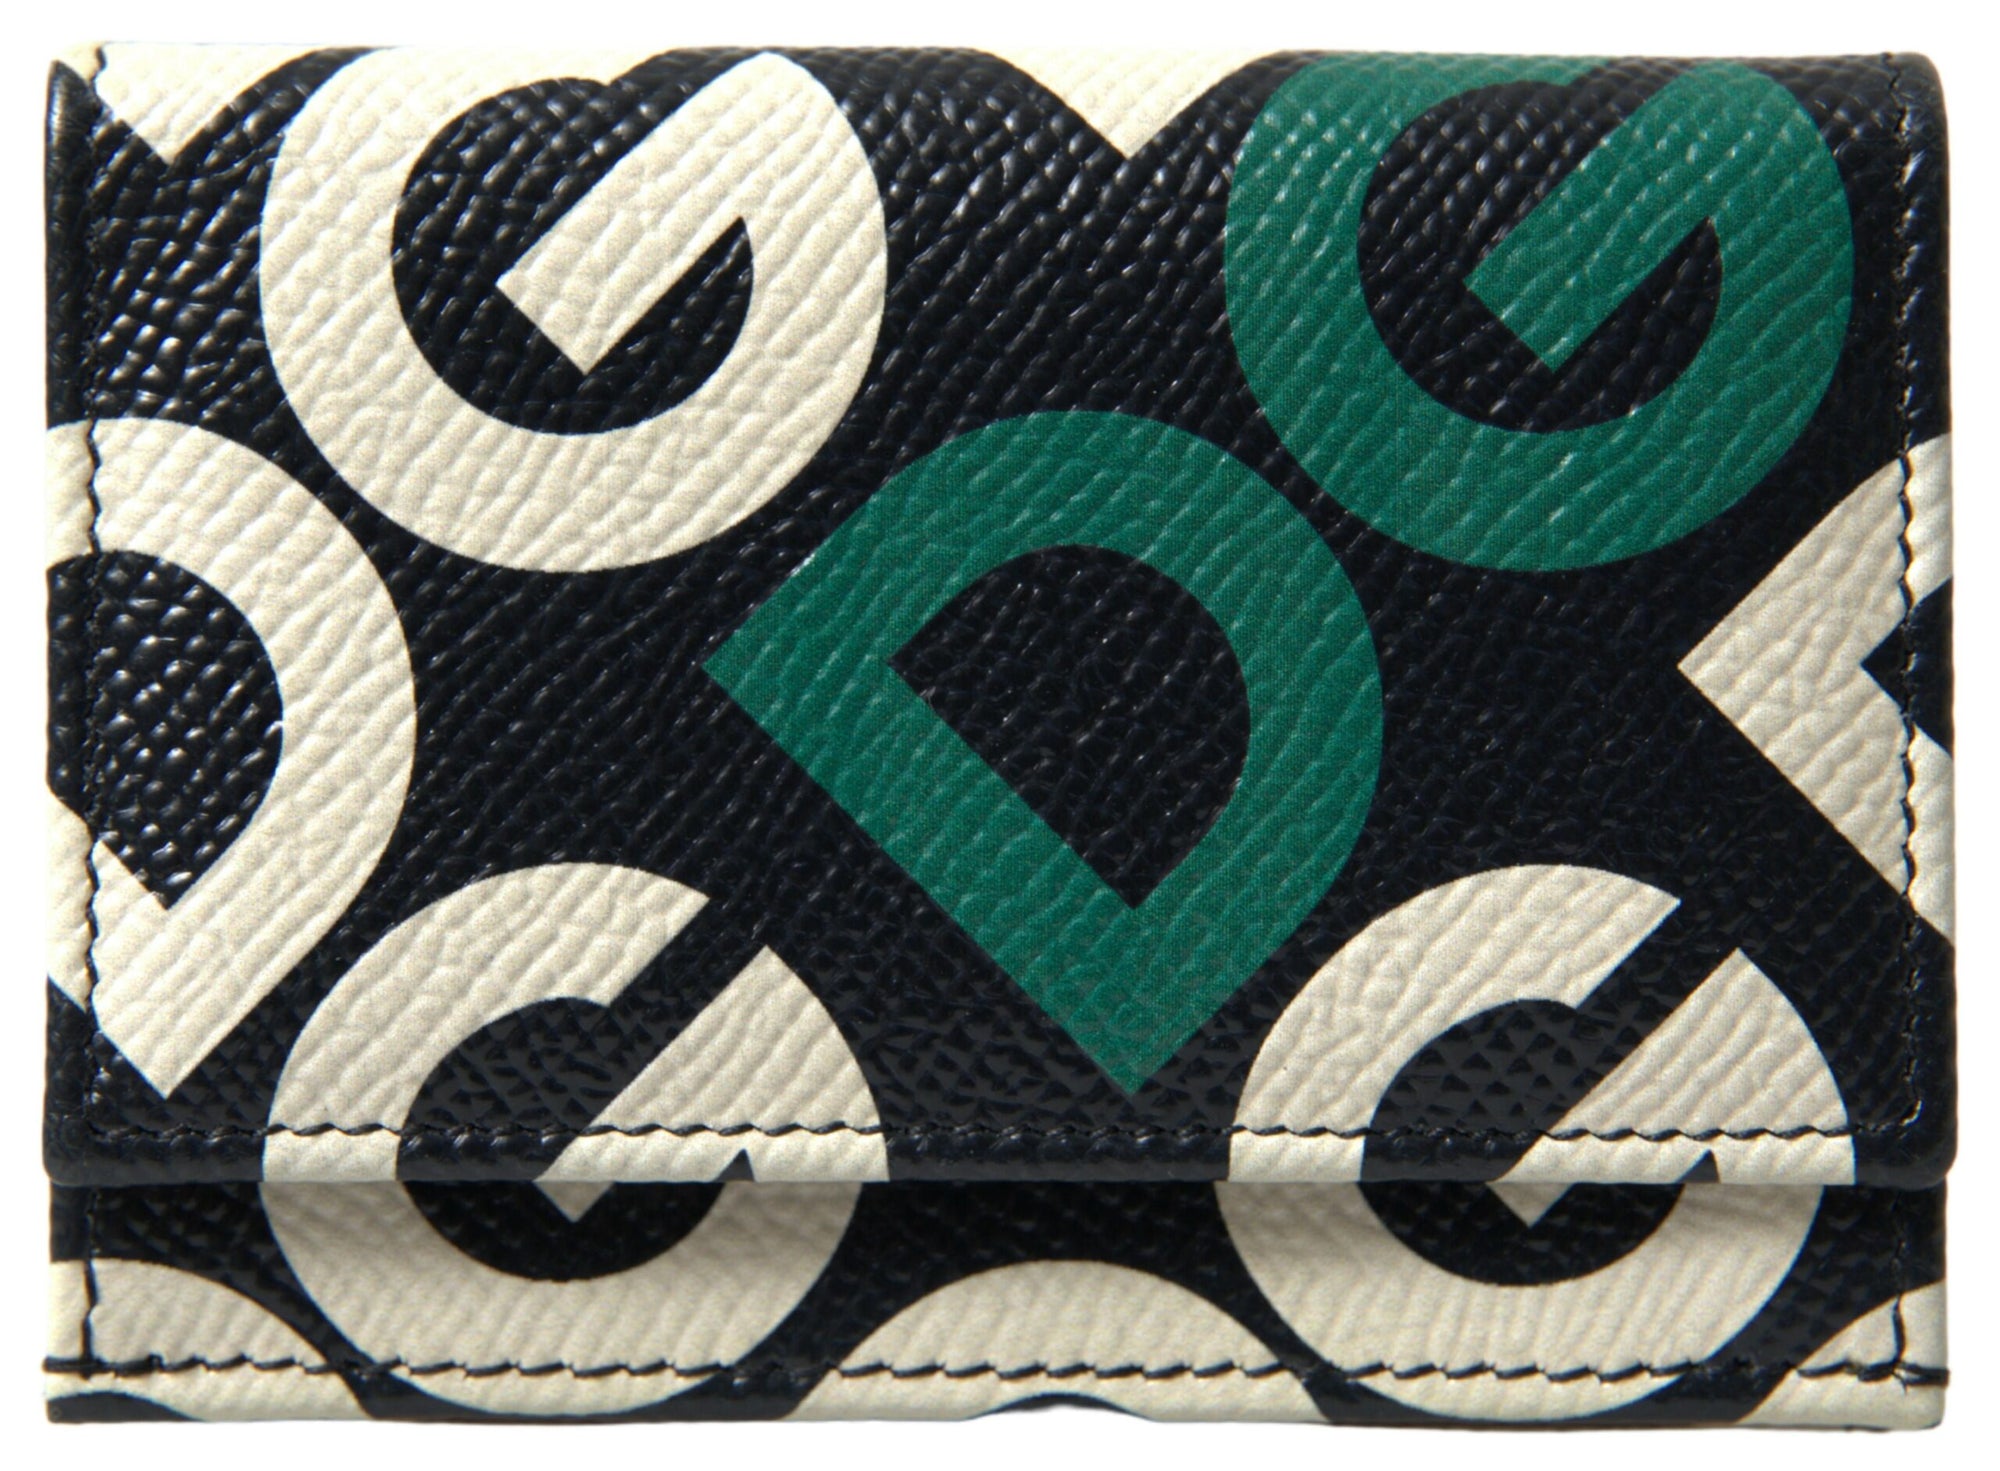 Chic Monochrome DG Mania Leather Wallet